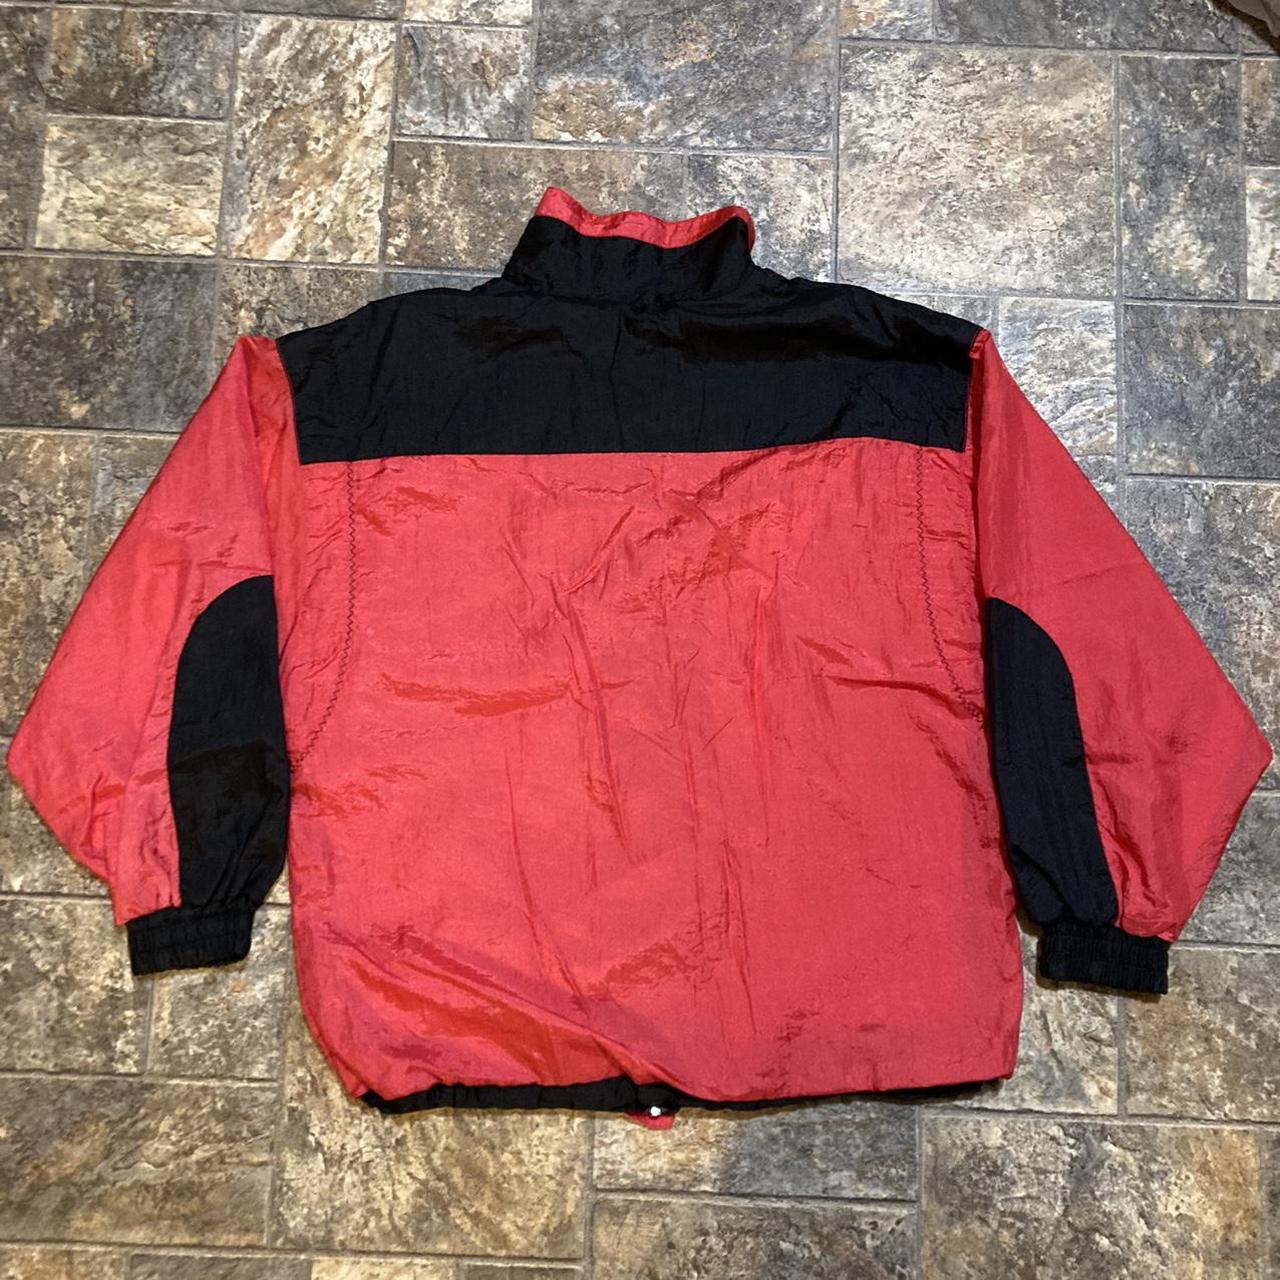 Vintage 80s 90s Style Nylon Windbreaker Jacket With... - Depop